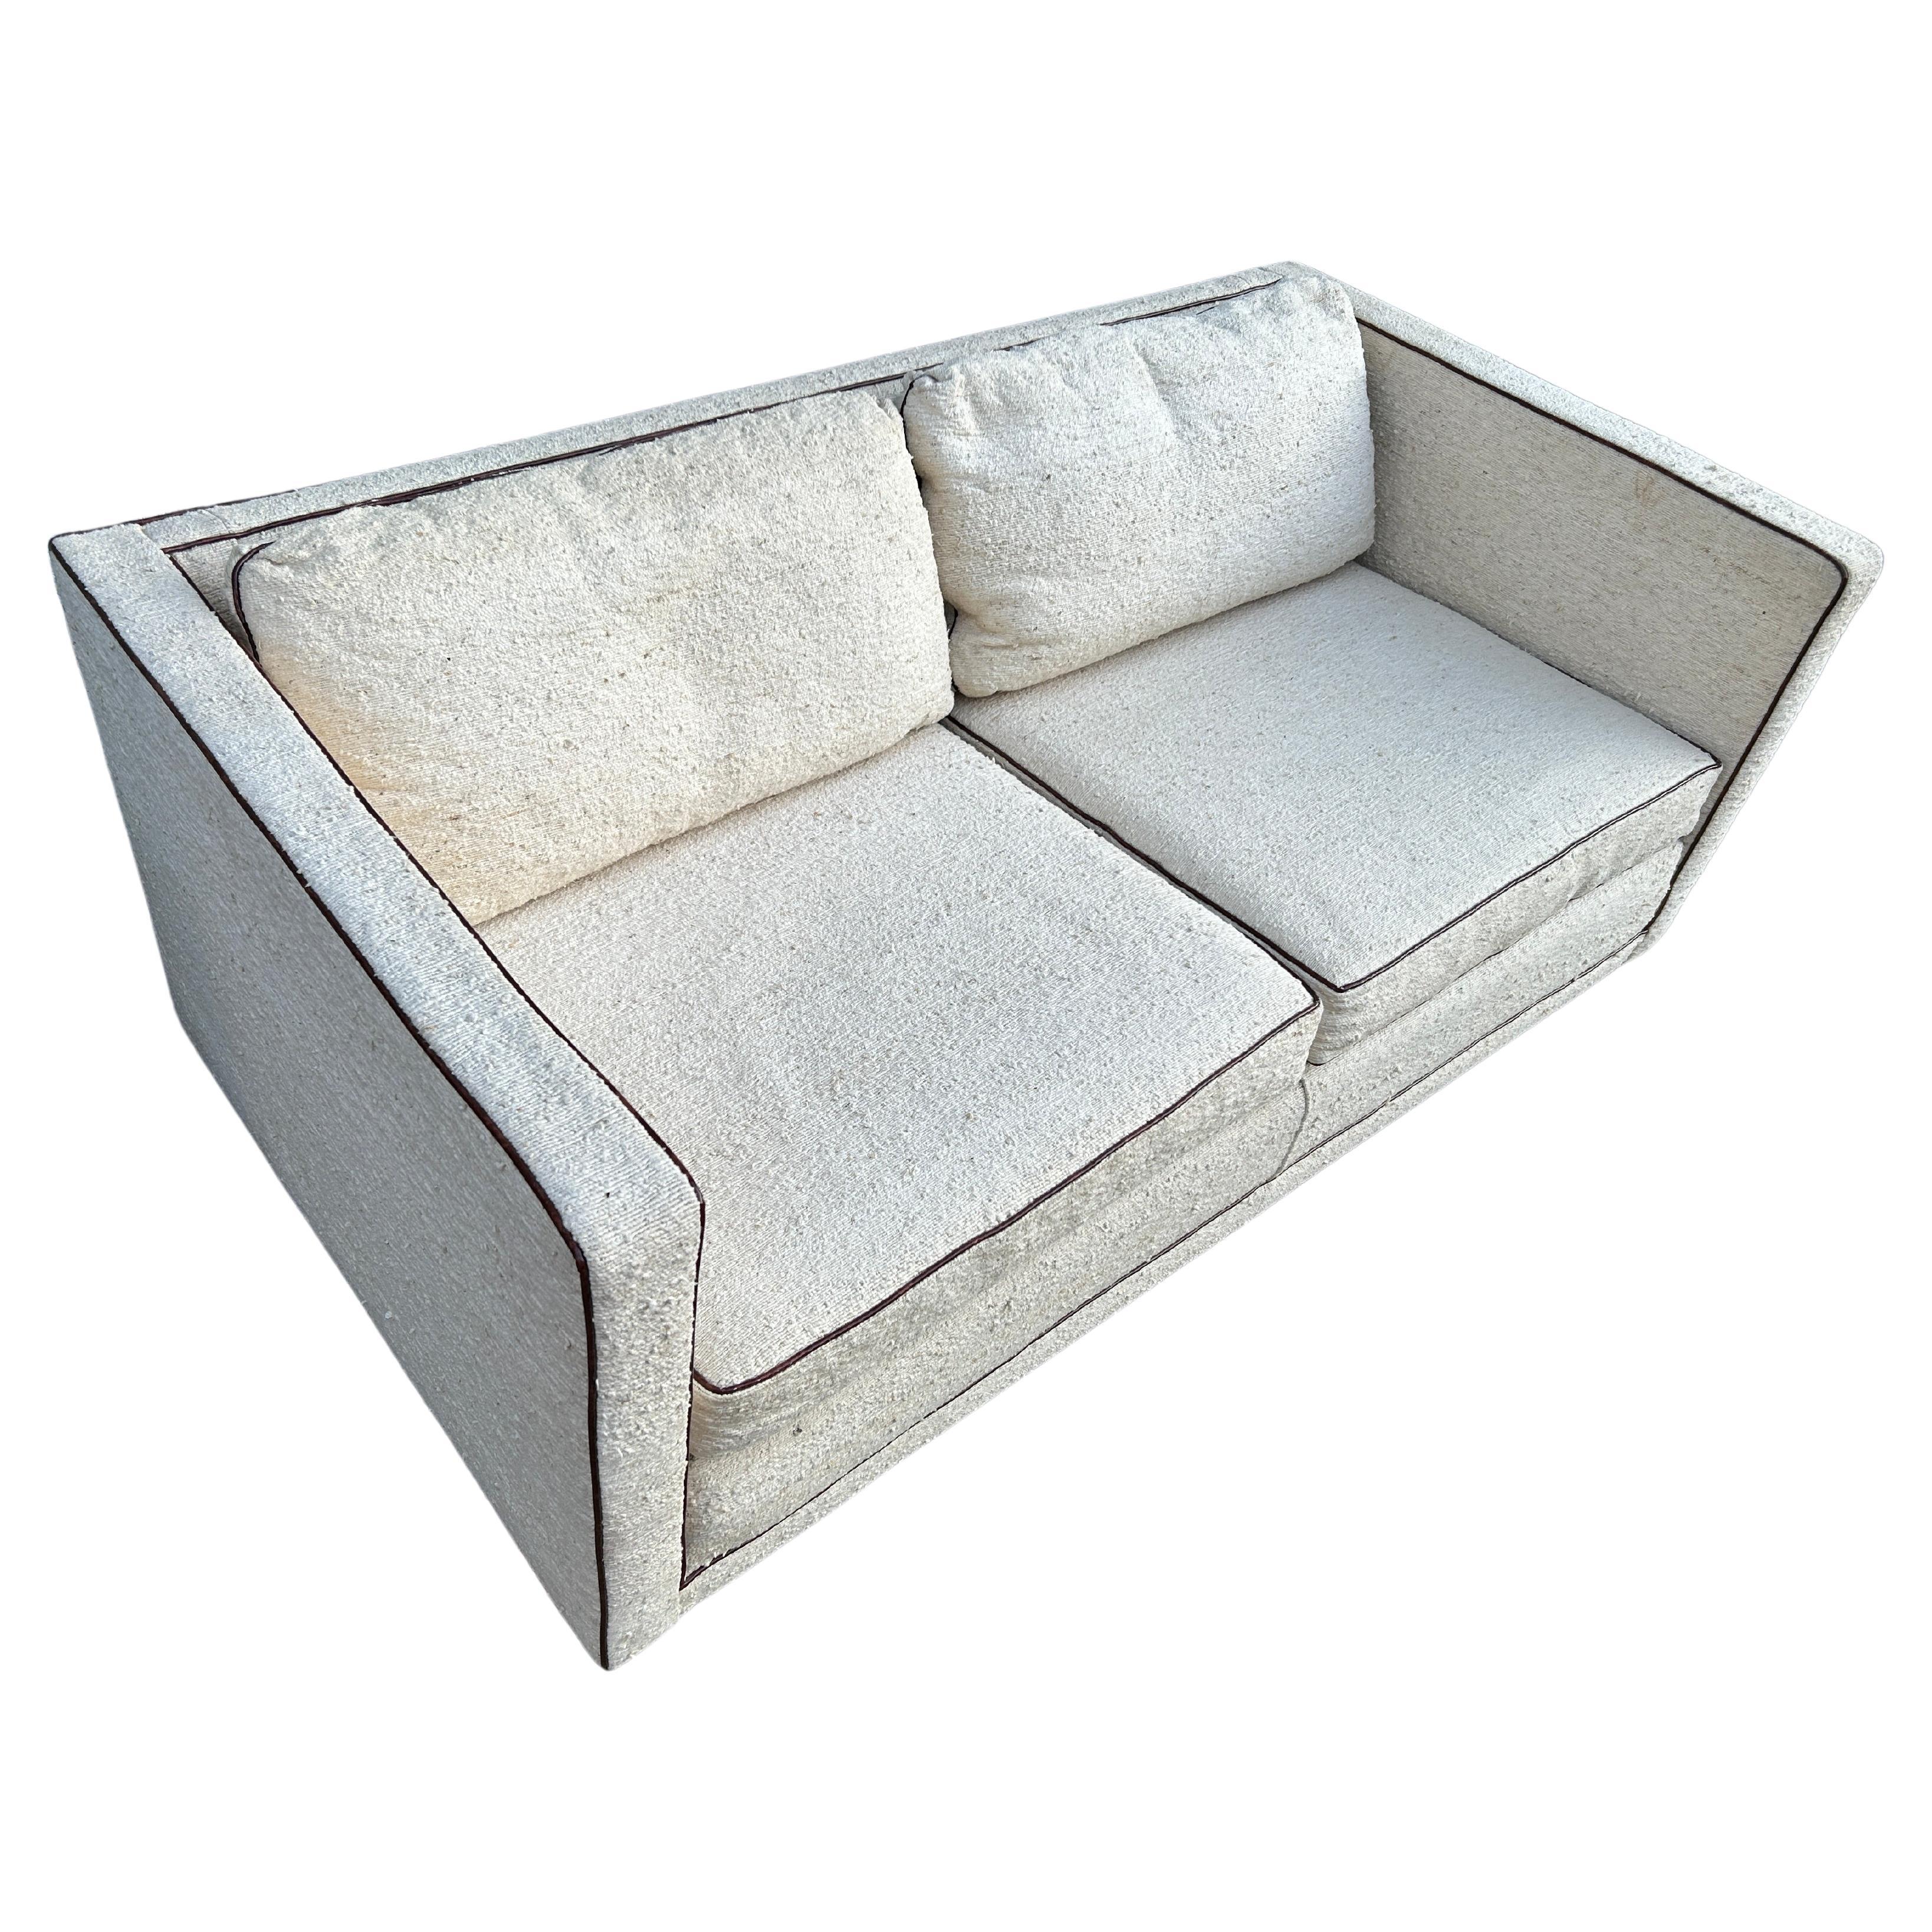 American Mid-Century Modern Cube Loveseat Sofa in off White Nubby Linen